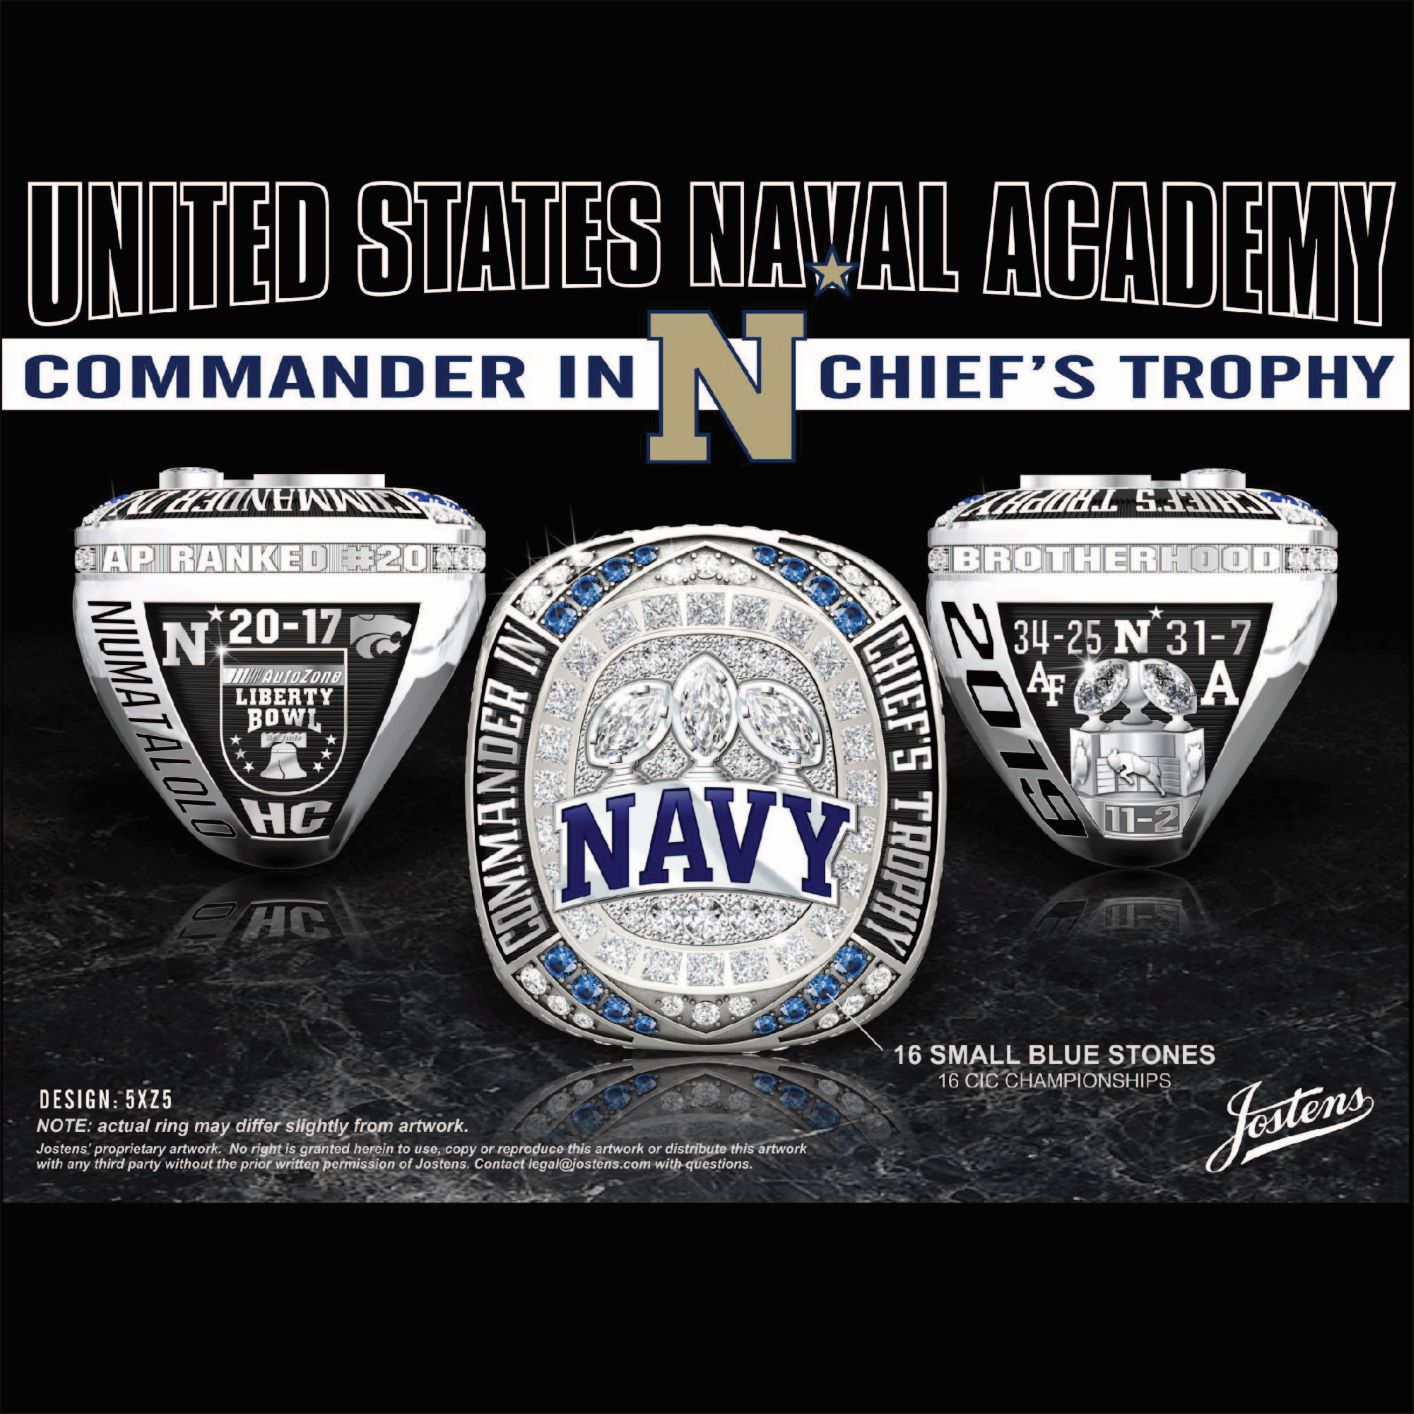 Unites States Naval Academy Men's Football 2019 CIC Championship Ring